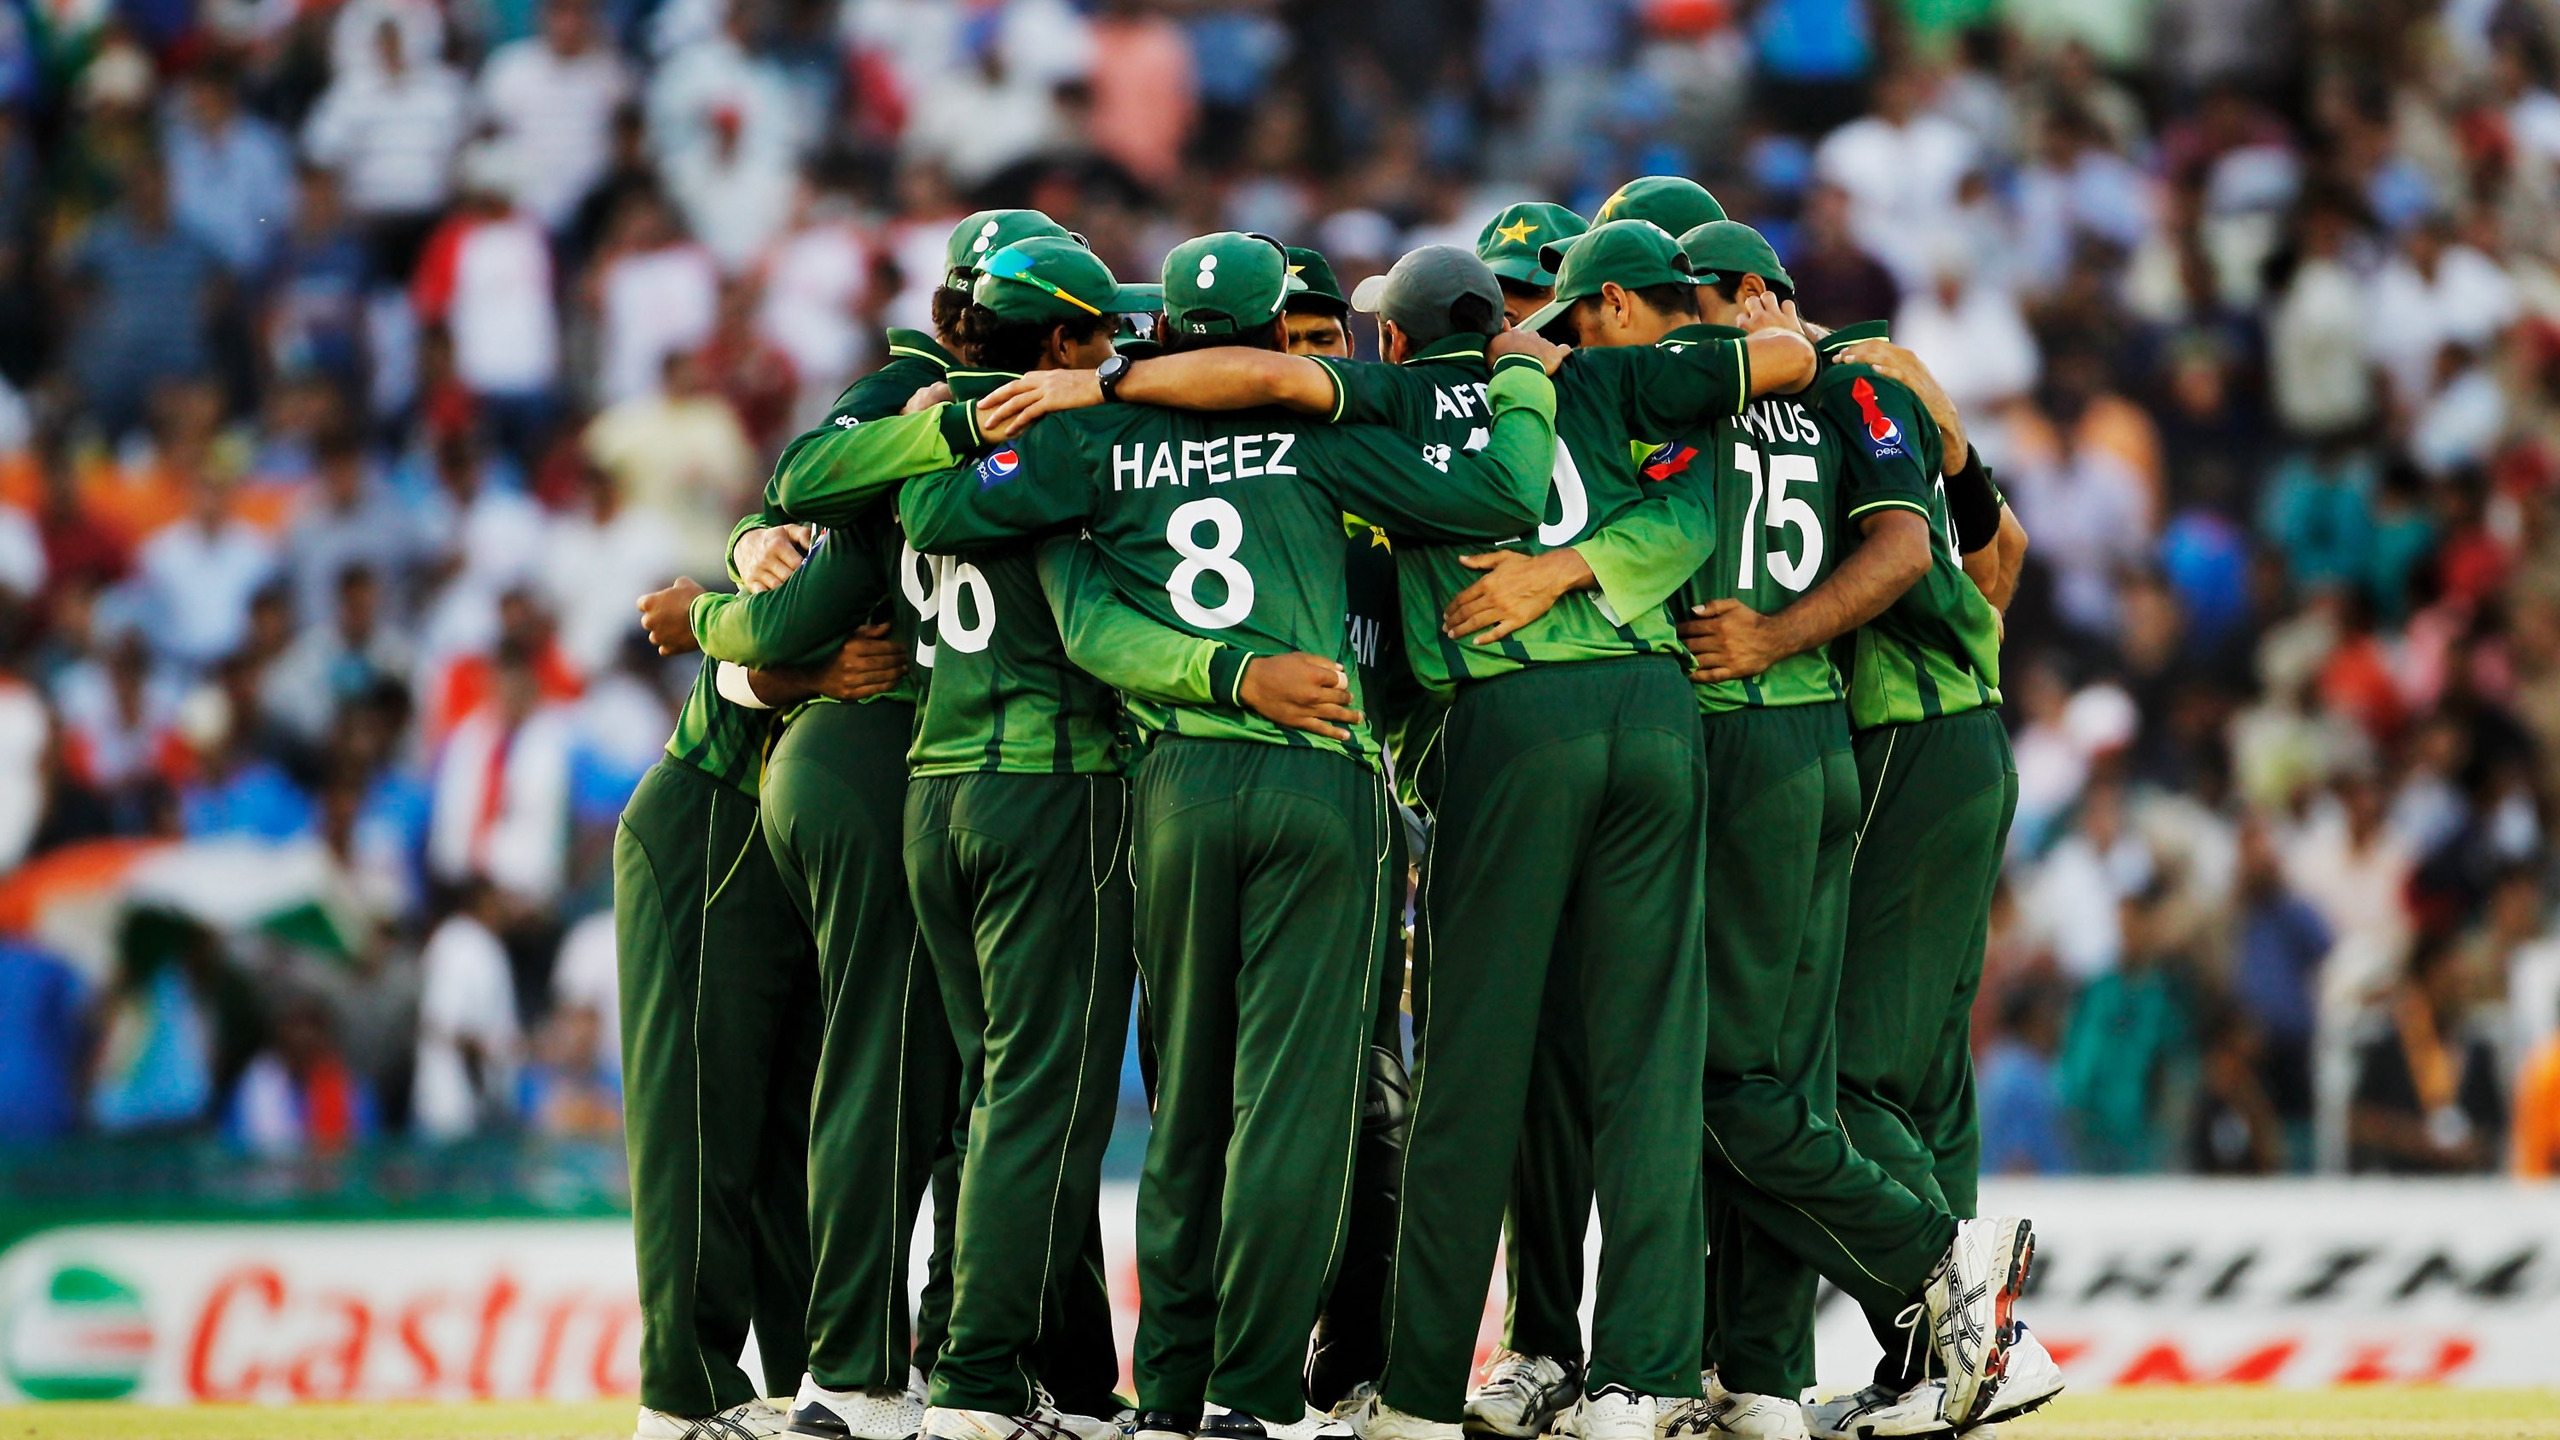 Pakistan Cricket Team for 2560x1440 HDTV resolution